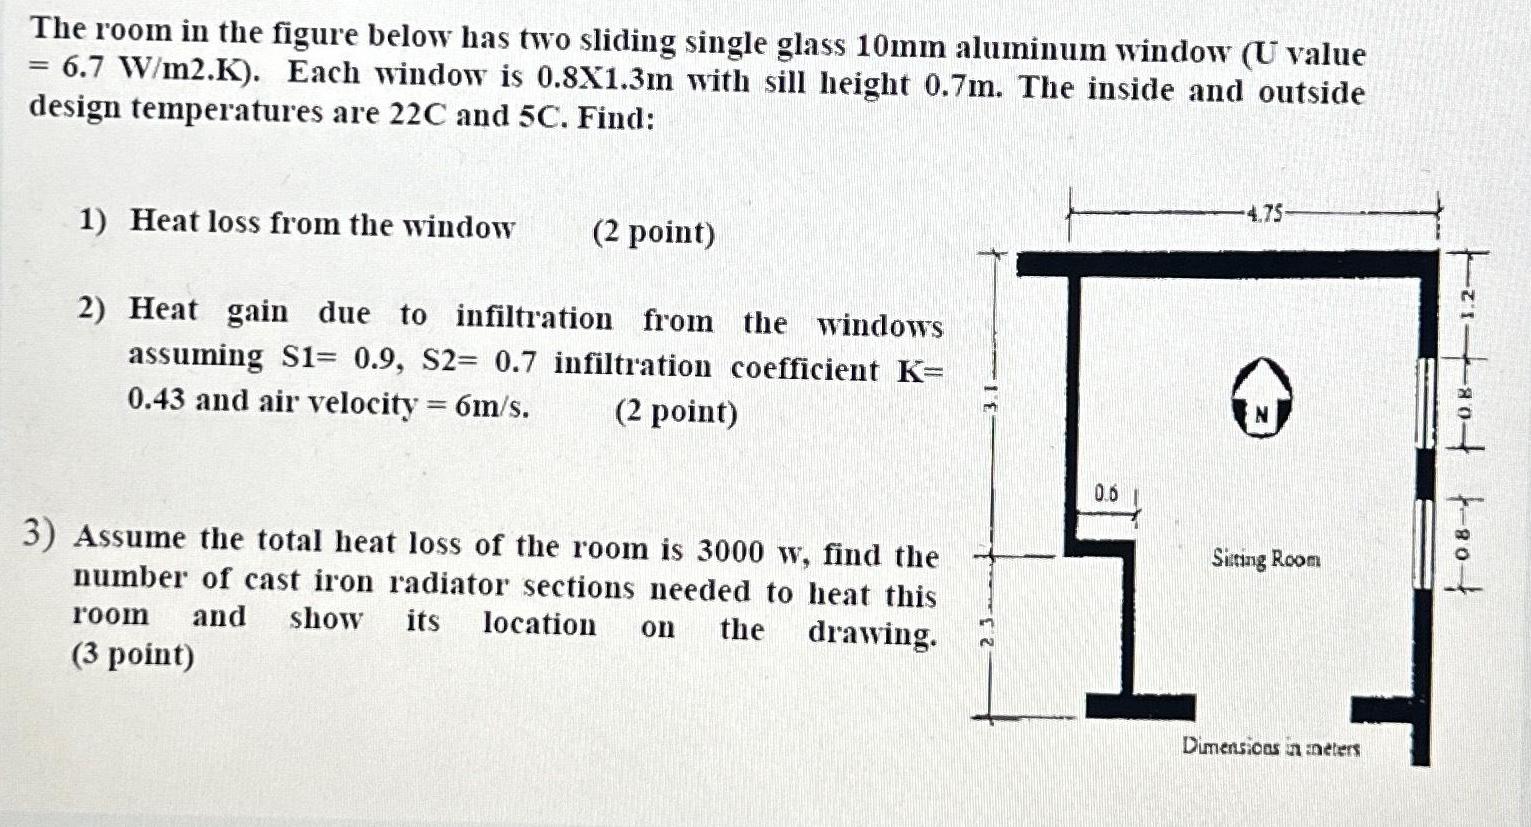 The room in the figure below has two sliding single glass 10mm aluminum window (U value = 6.7 W/m2.K). Each